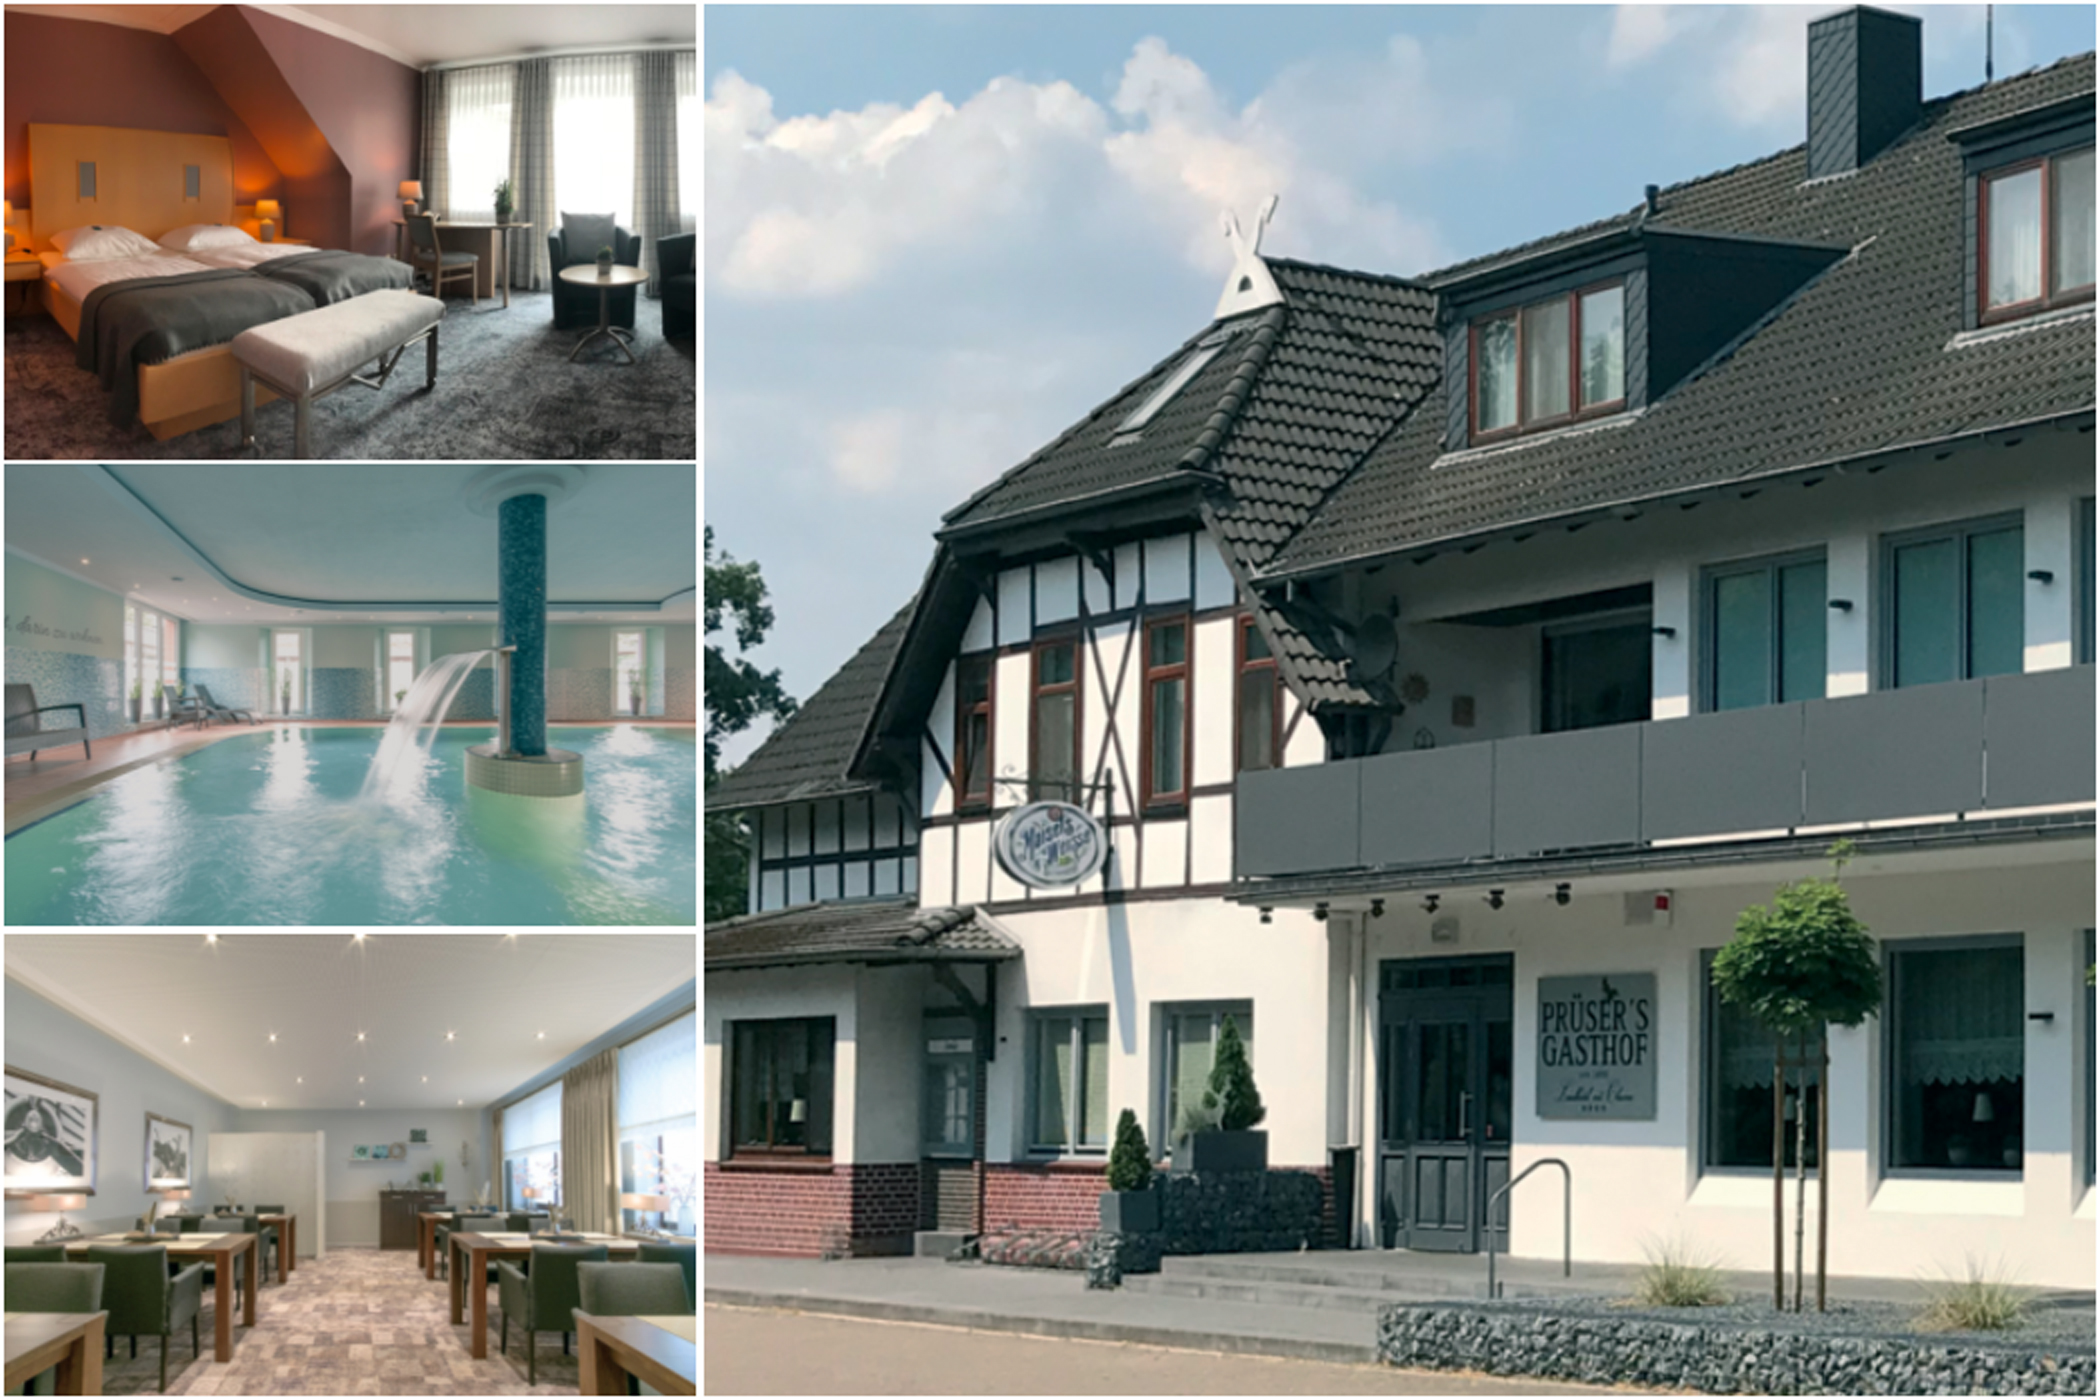 Hotel & Restaurant - Prüsers Gasthof